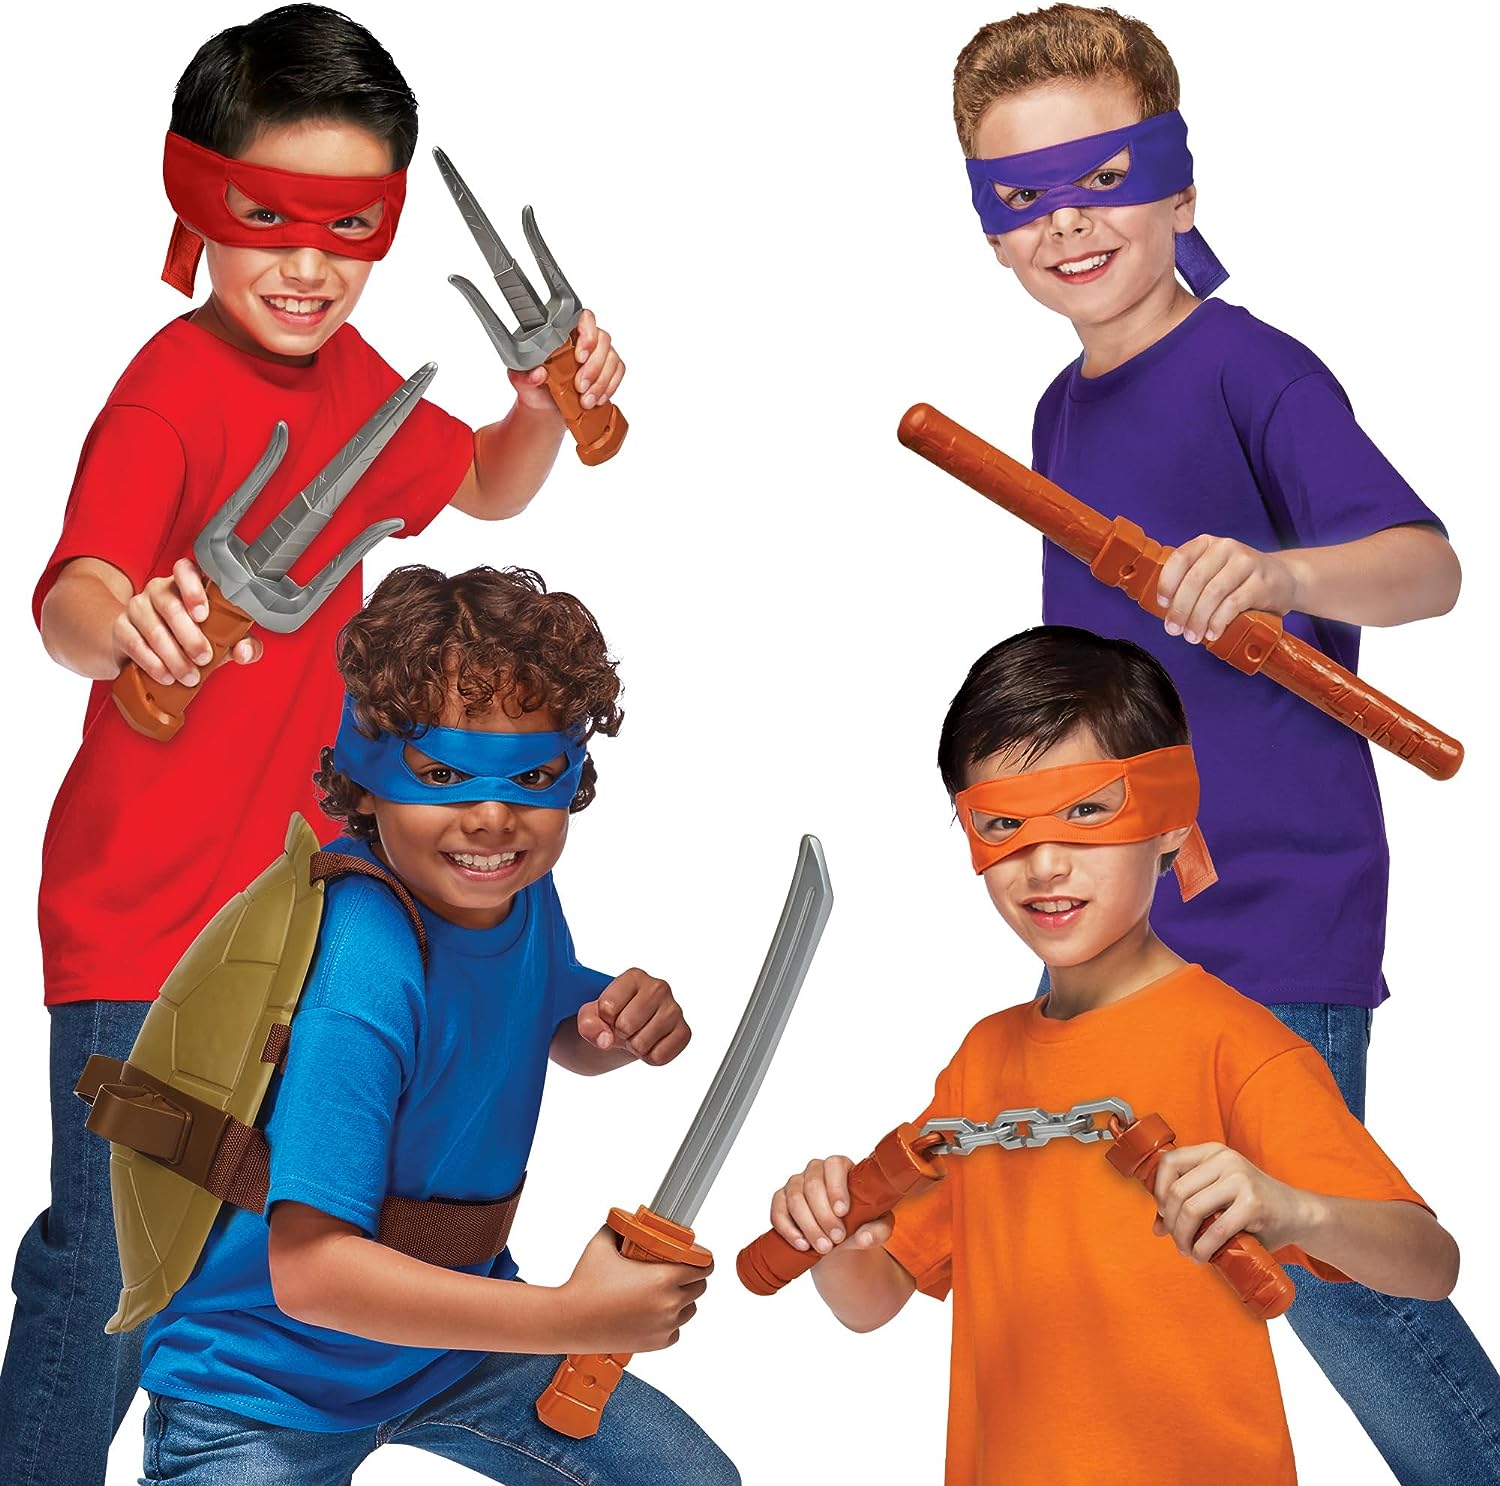 Teenage Mutant Ninja Turtles: Mutant Mayhem Role Play Treasure Chest by Playmates Toys - Amazon Exclusive